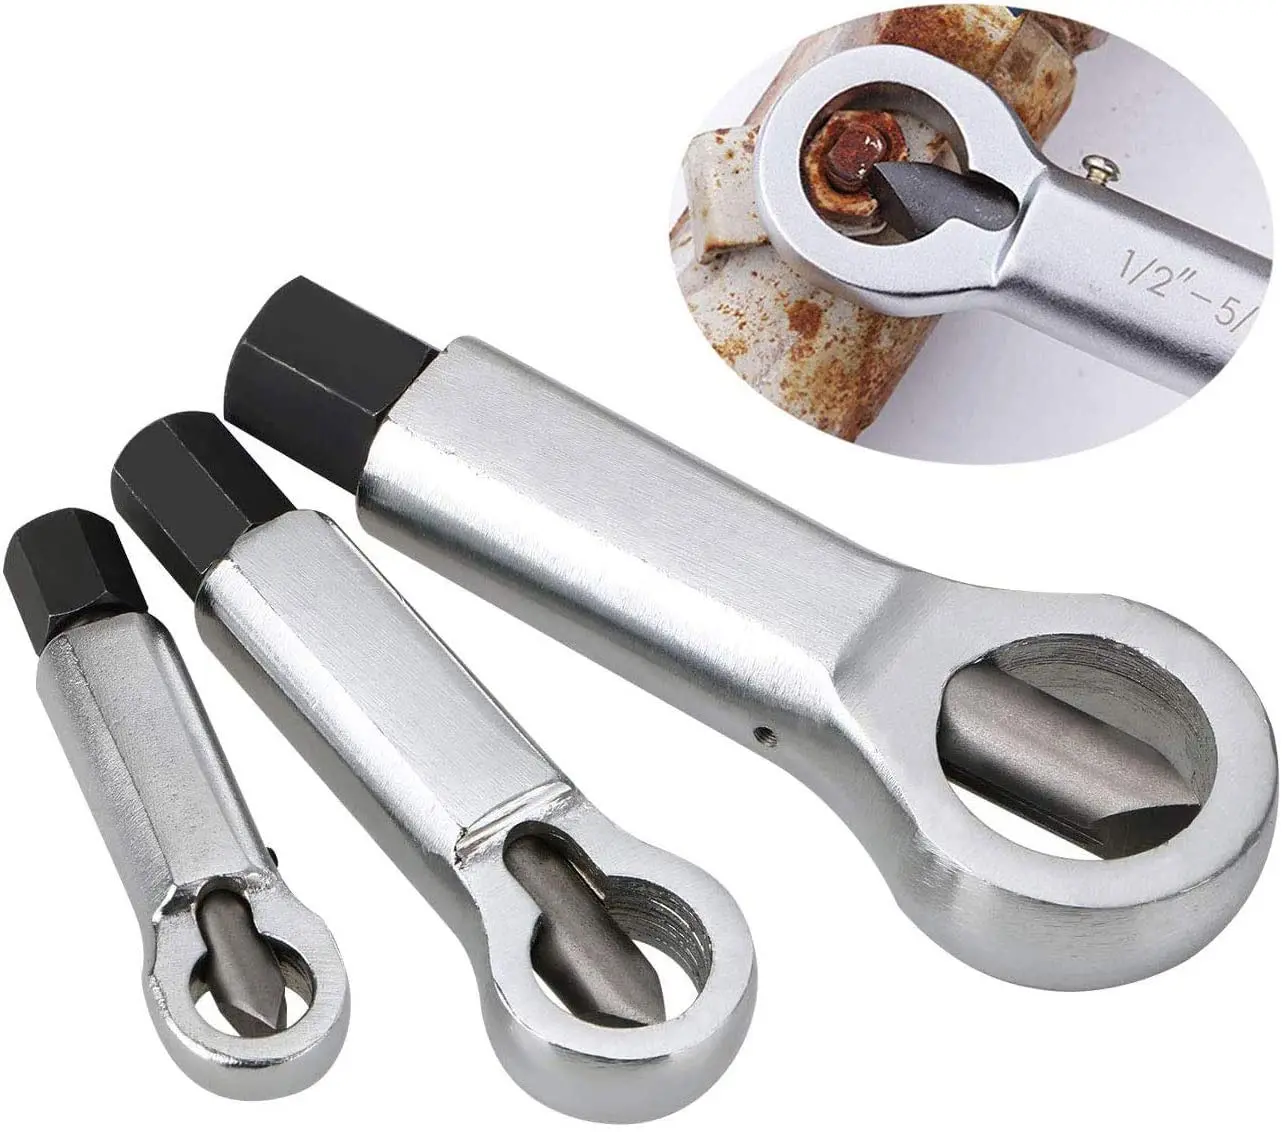 

3pcs Metal Nut Splitter Cracker Breaker Manual Pressure Nut Cracker Remover Extractor Tool 9-12mm/12-16mm/16-22mm